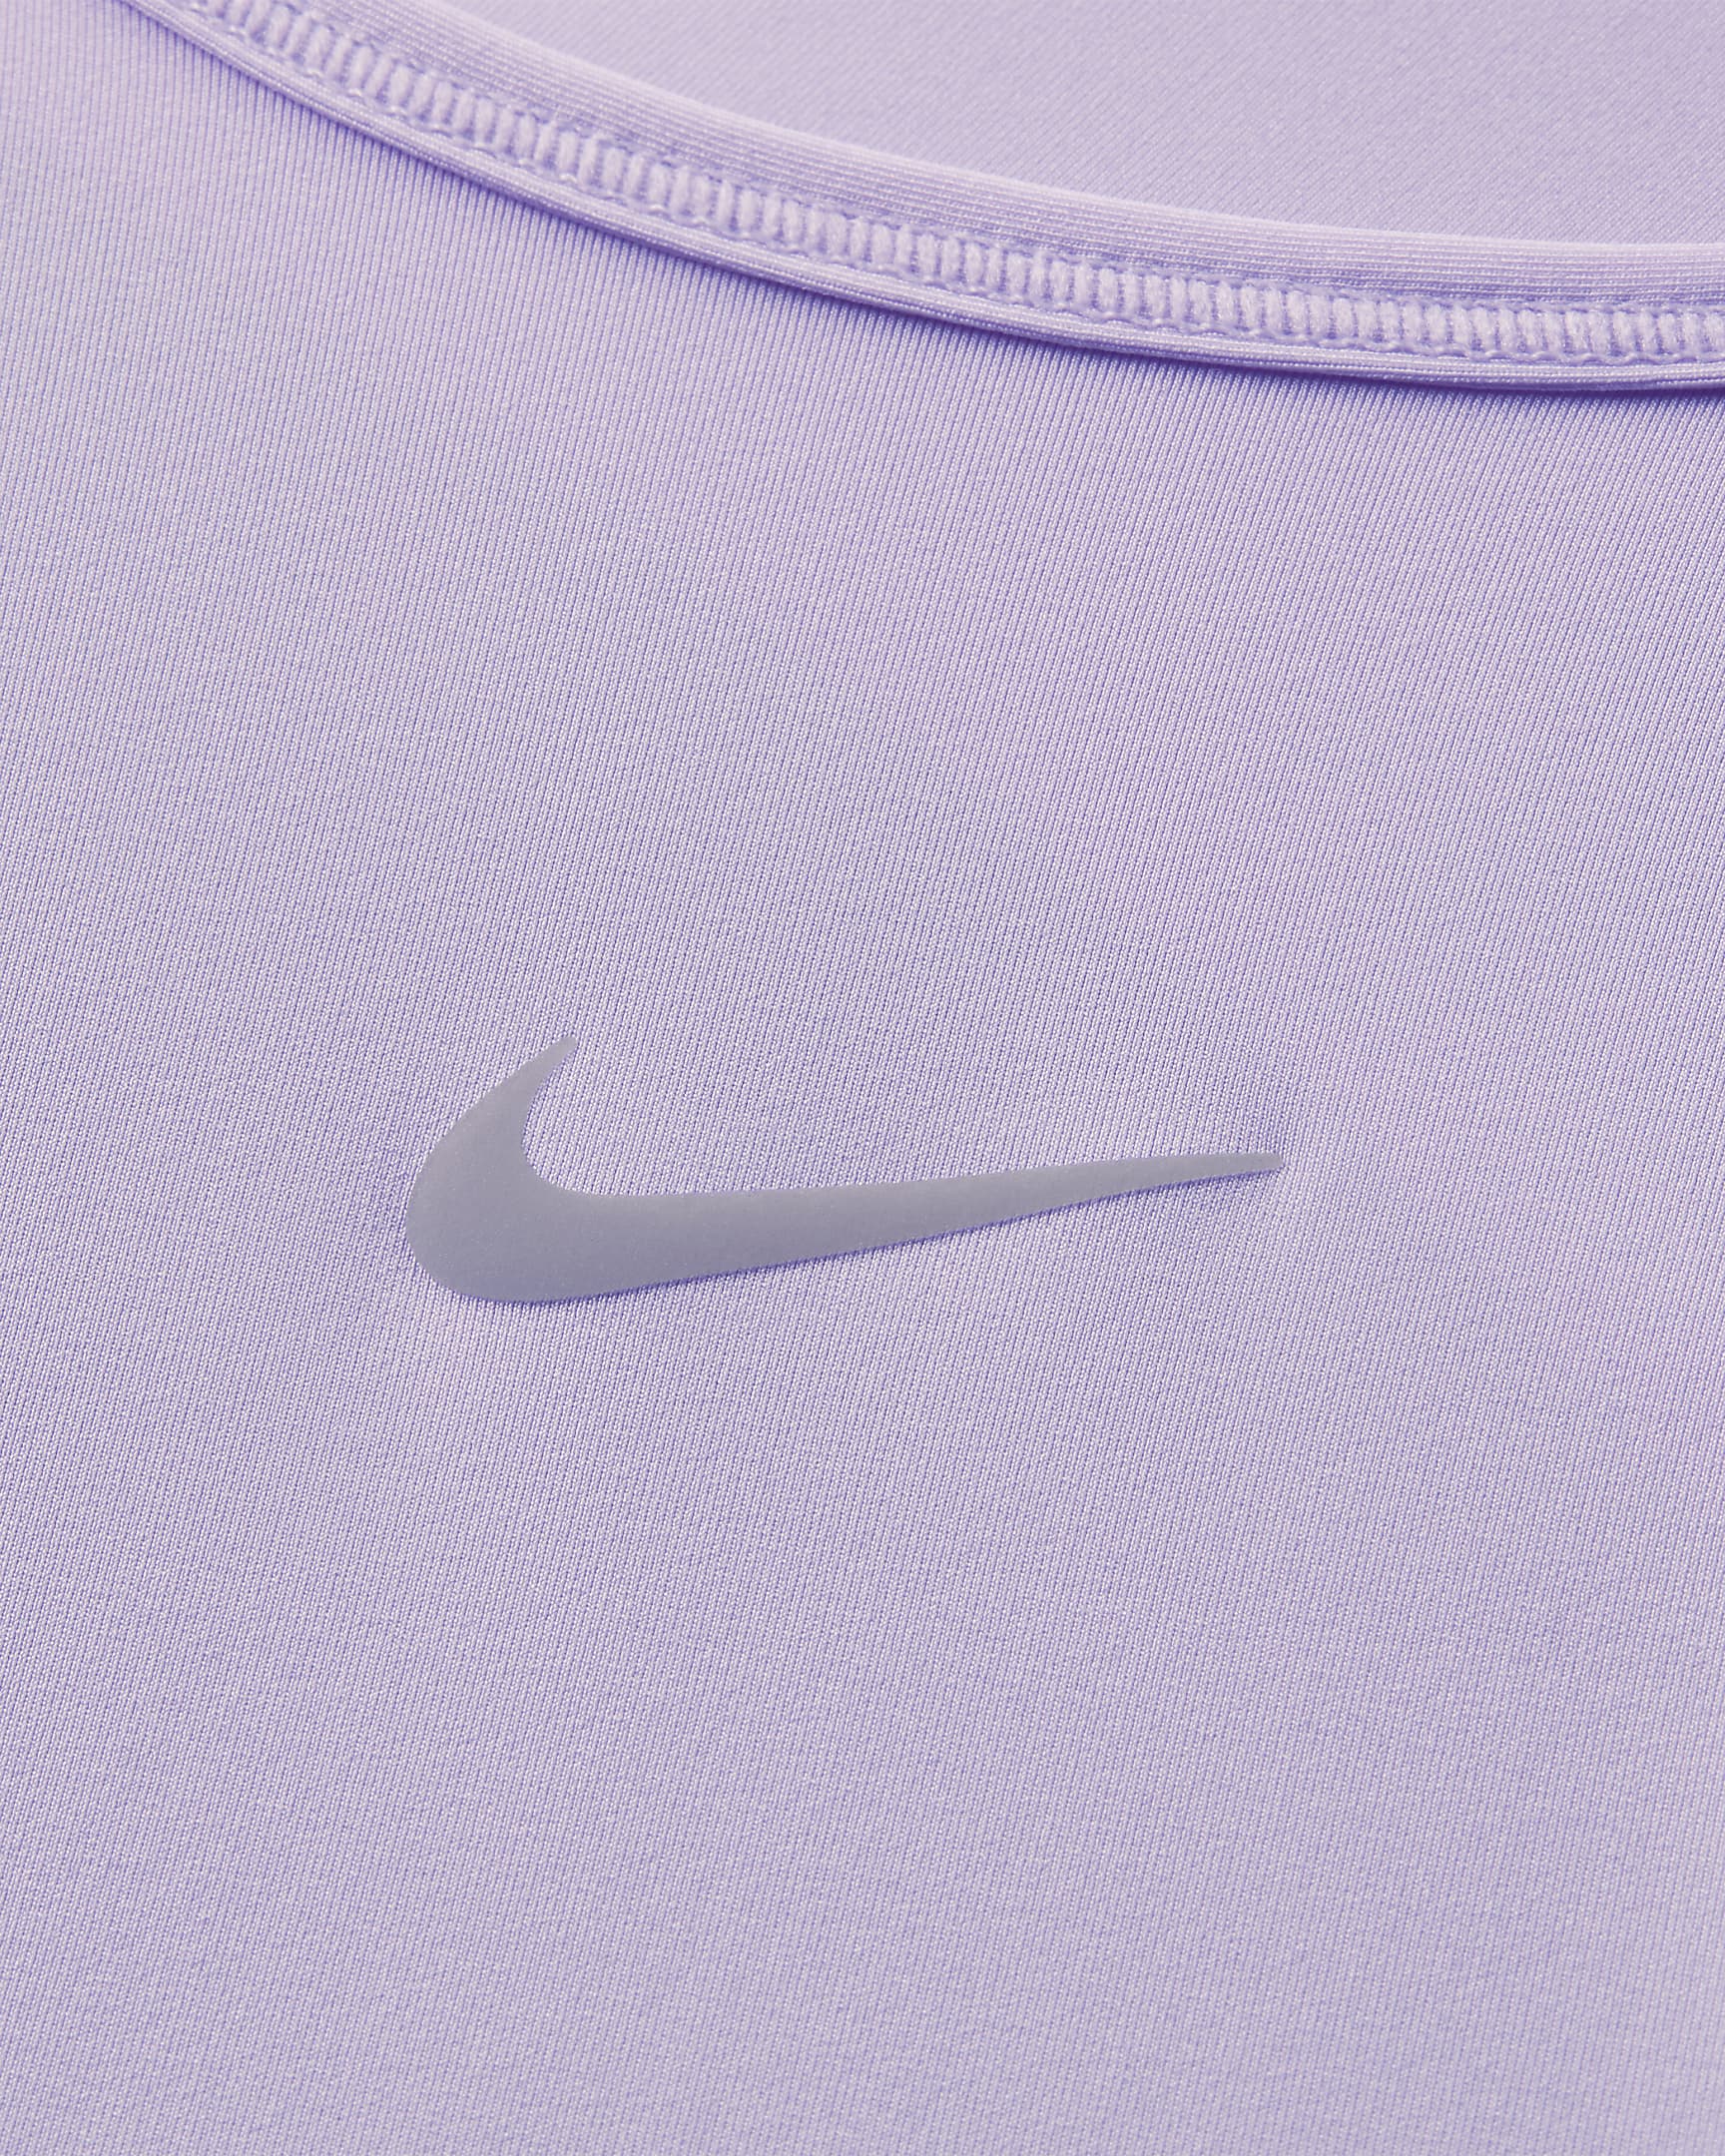 Nike One Classic Women's Dri-FIT Short-Sleeve Cropped Twist Top. Nike BG